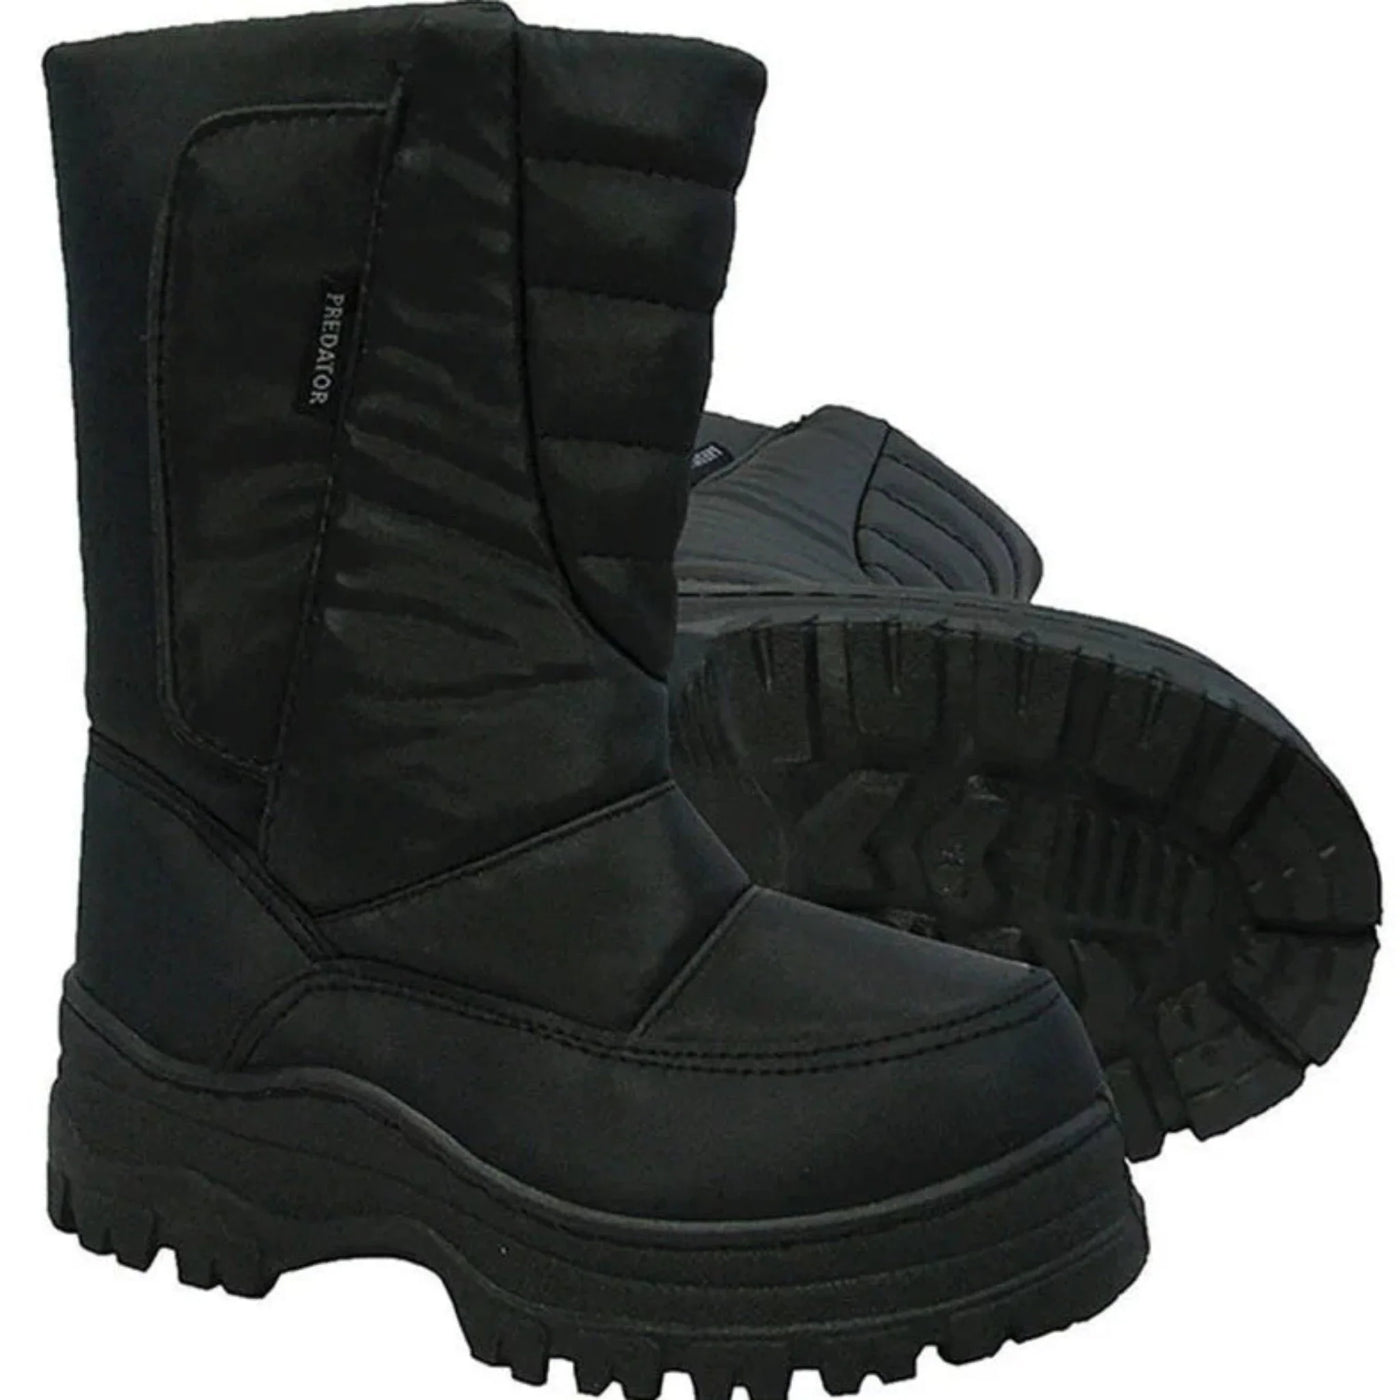 XTM Men's Predator Snow Boots - Black